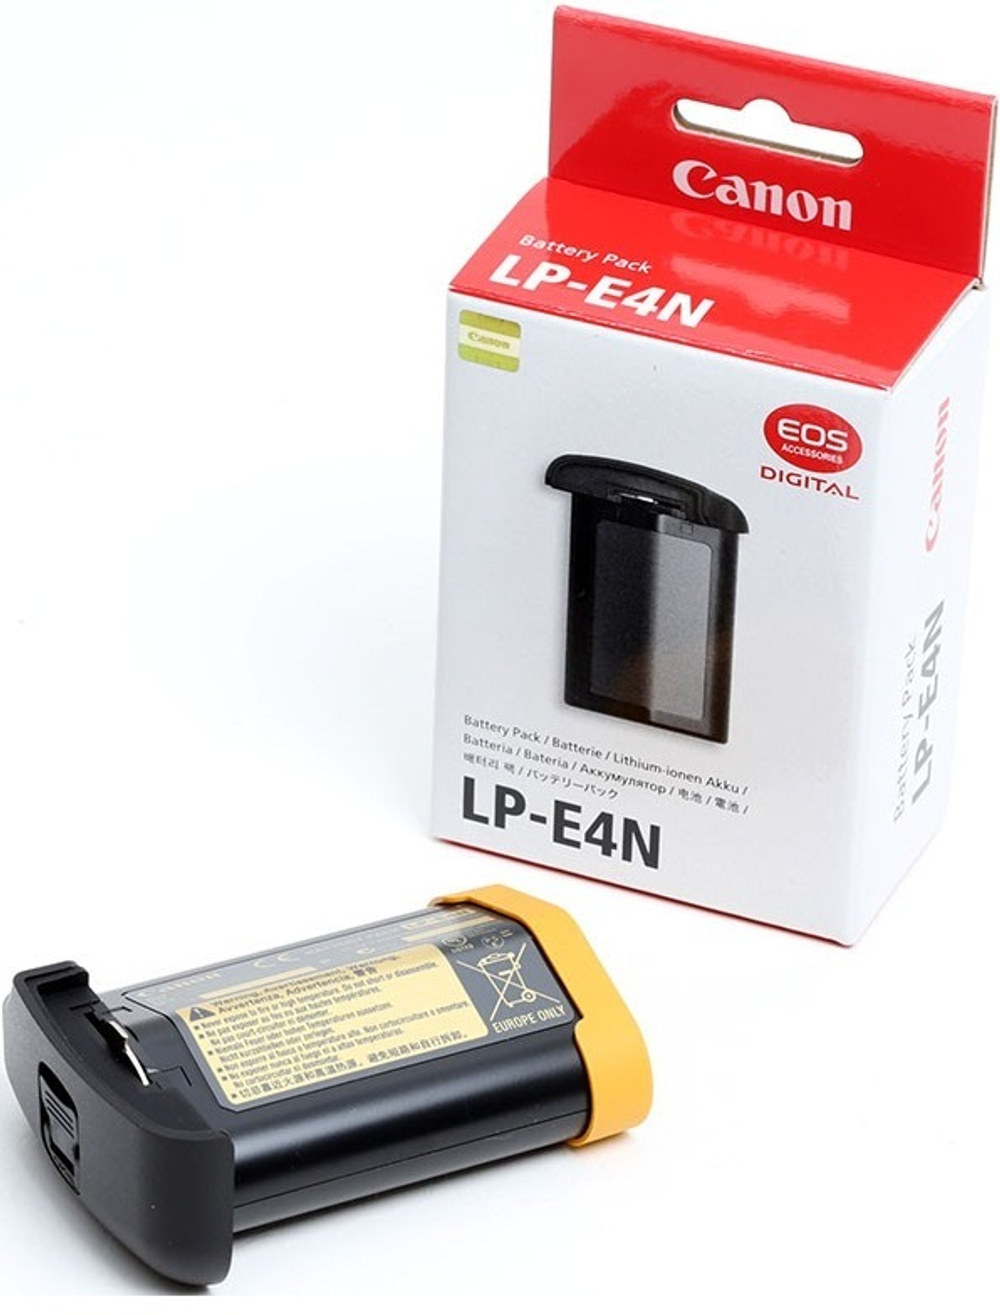 Аккумулятор Canon Battery Pack LP-E4N для Canon EOS 1D Mark III, 1Ds Mark III, 1D Mark IV, 1Dx